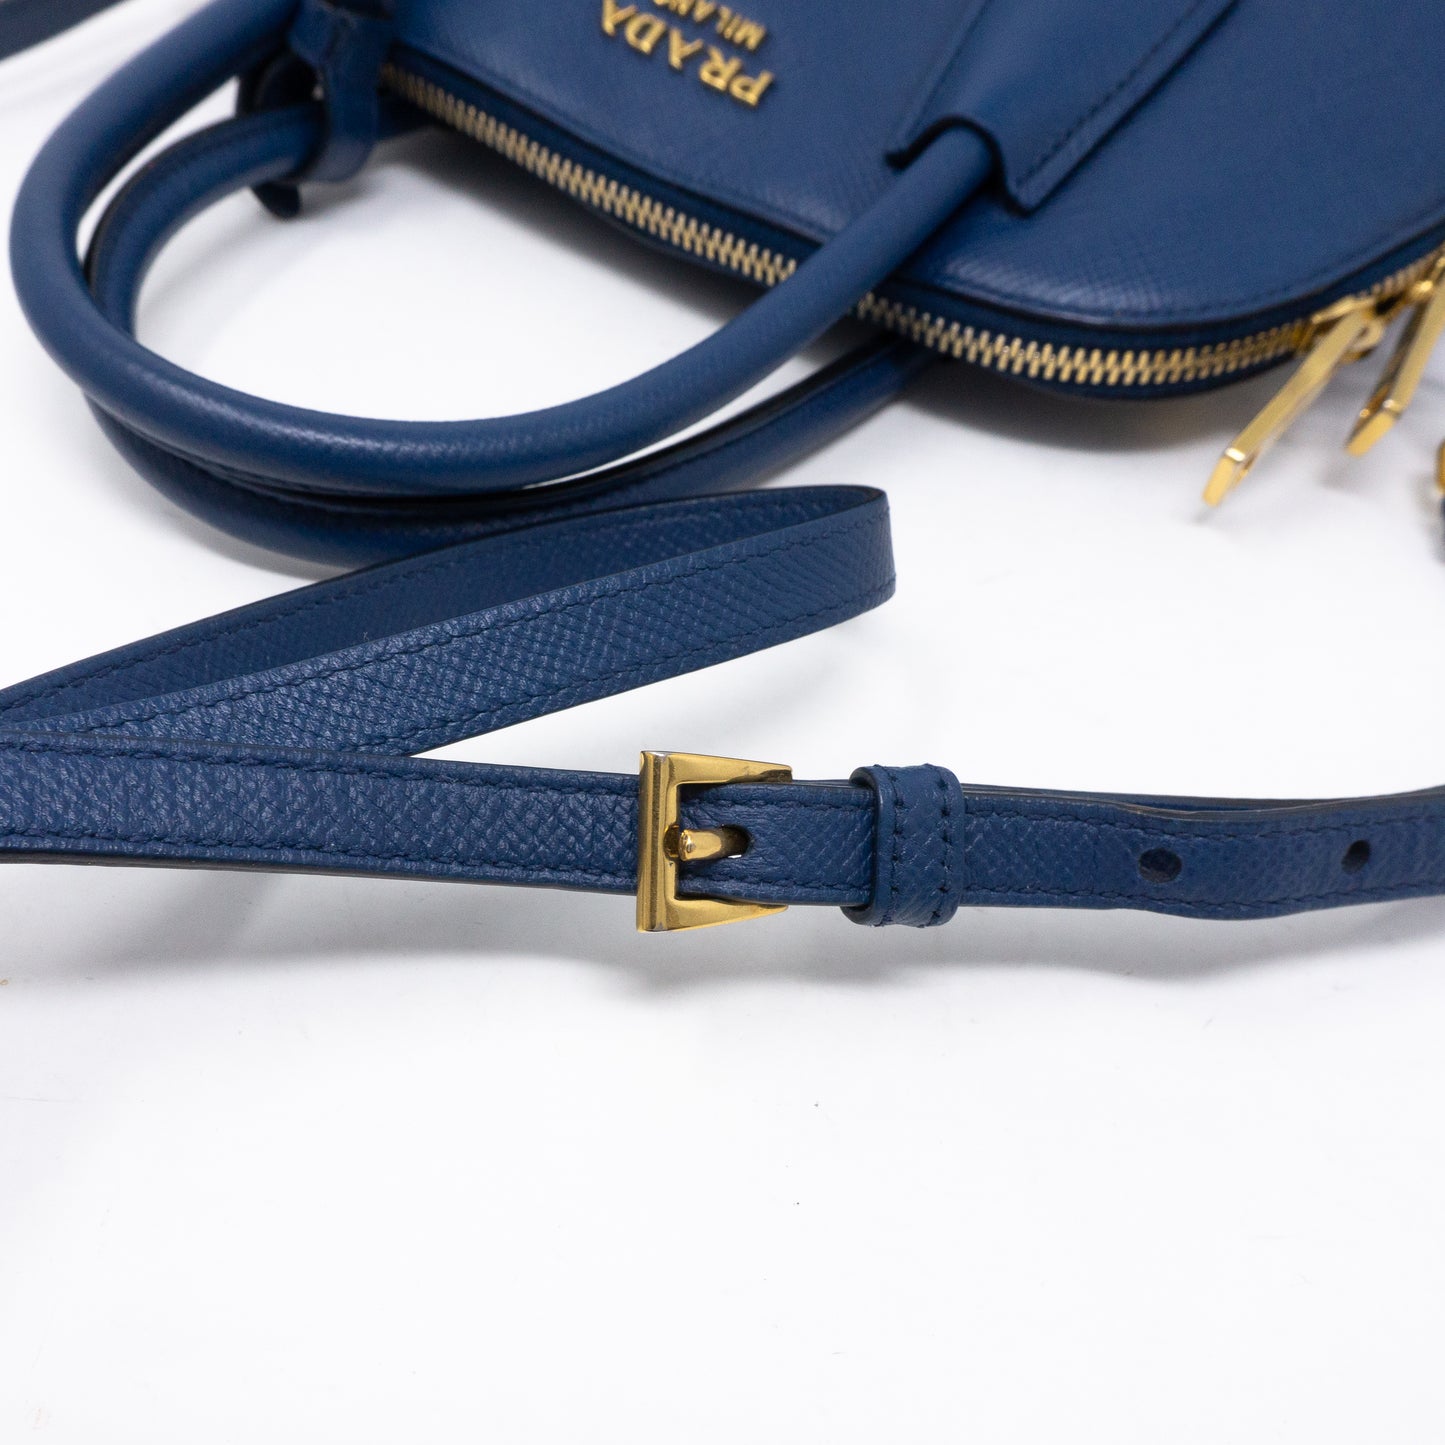 Small Crossbody Handbag Blue Saffiano Leather